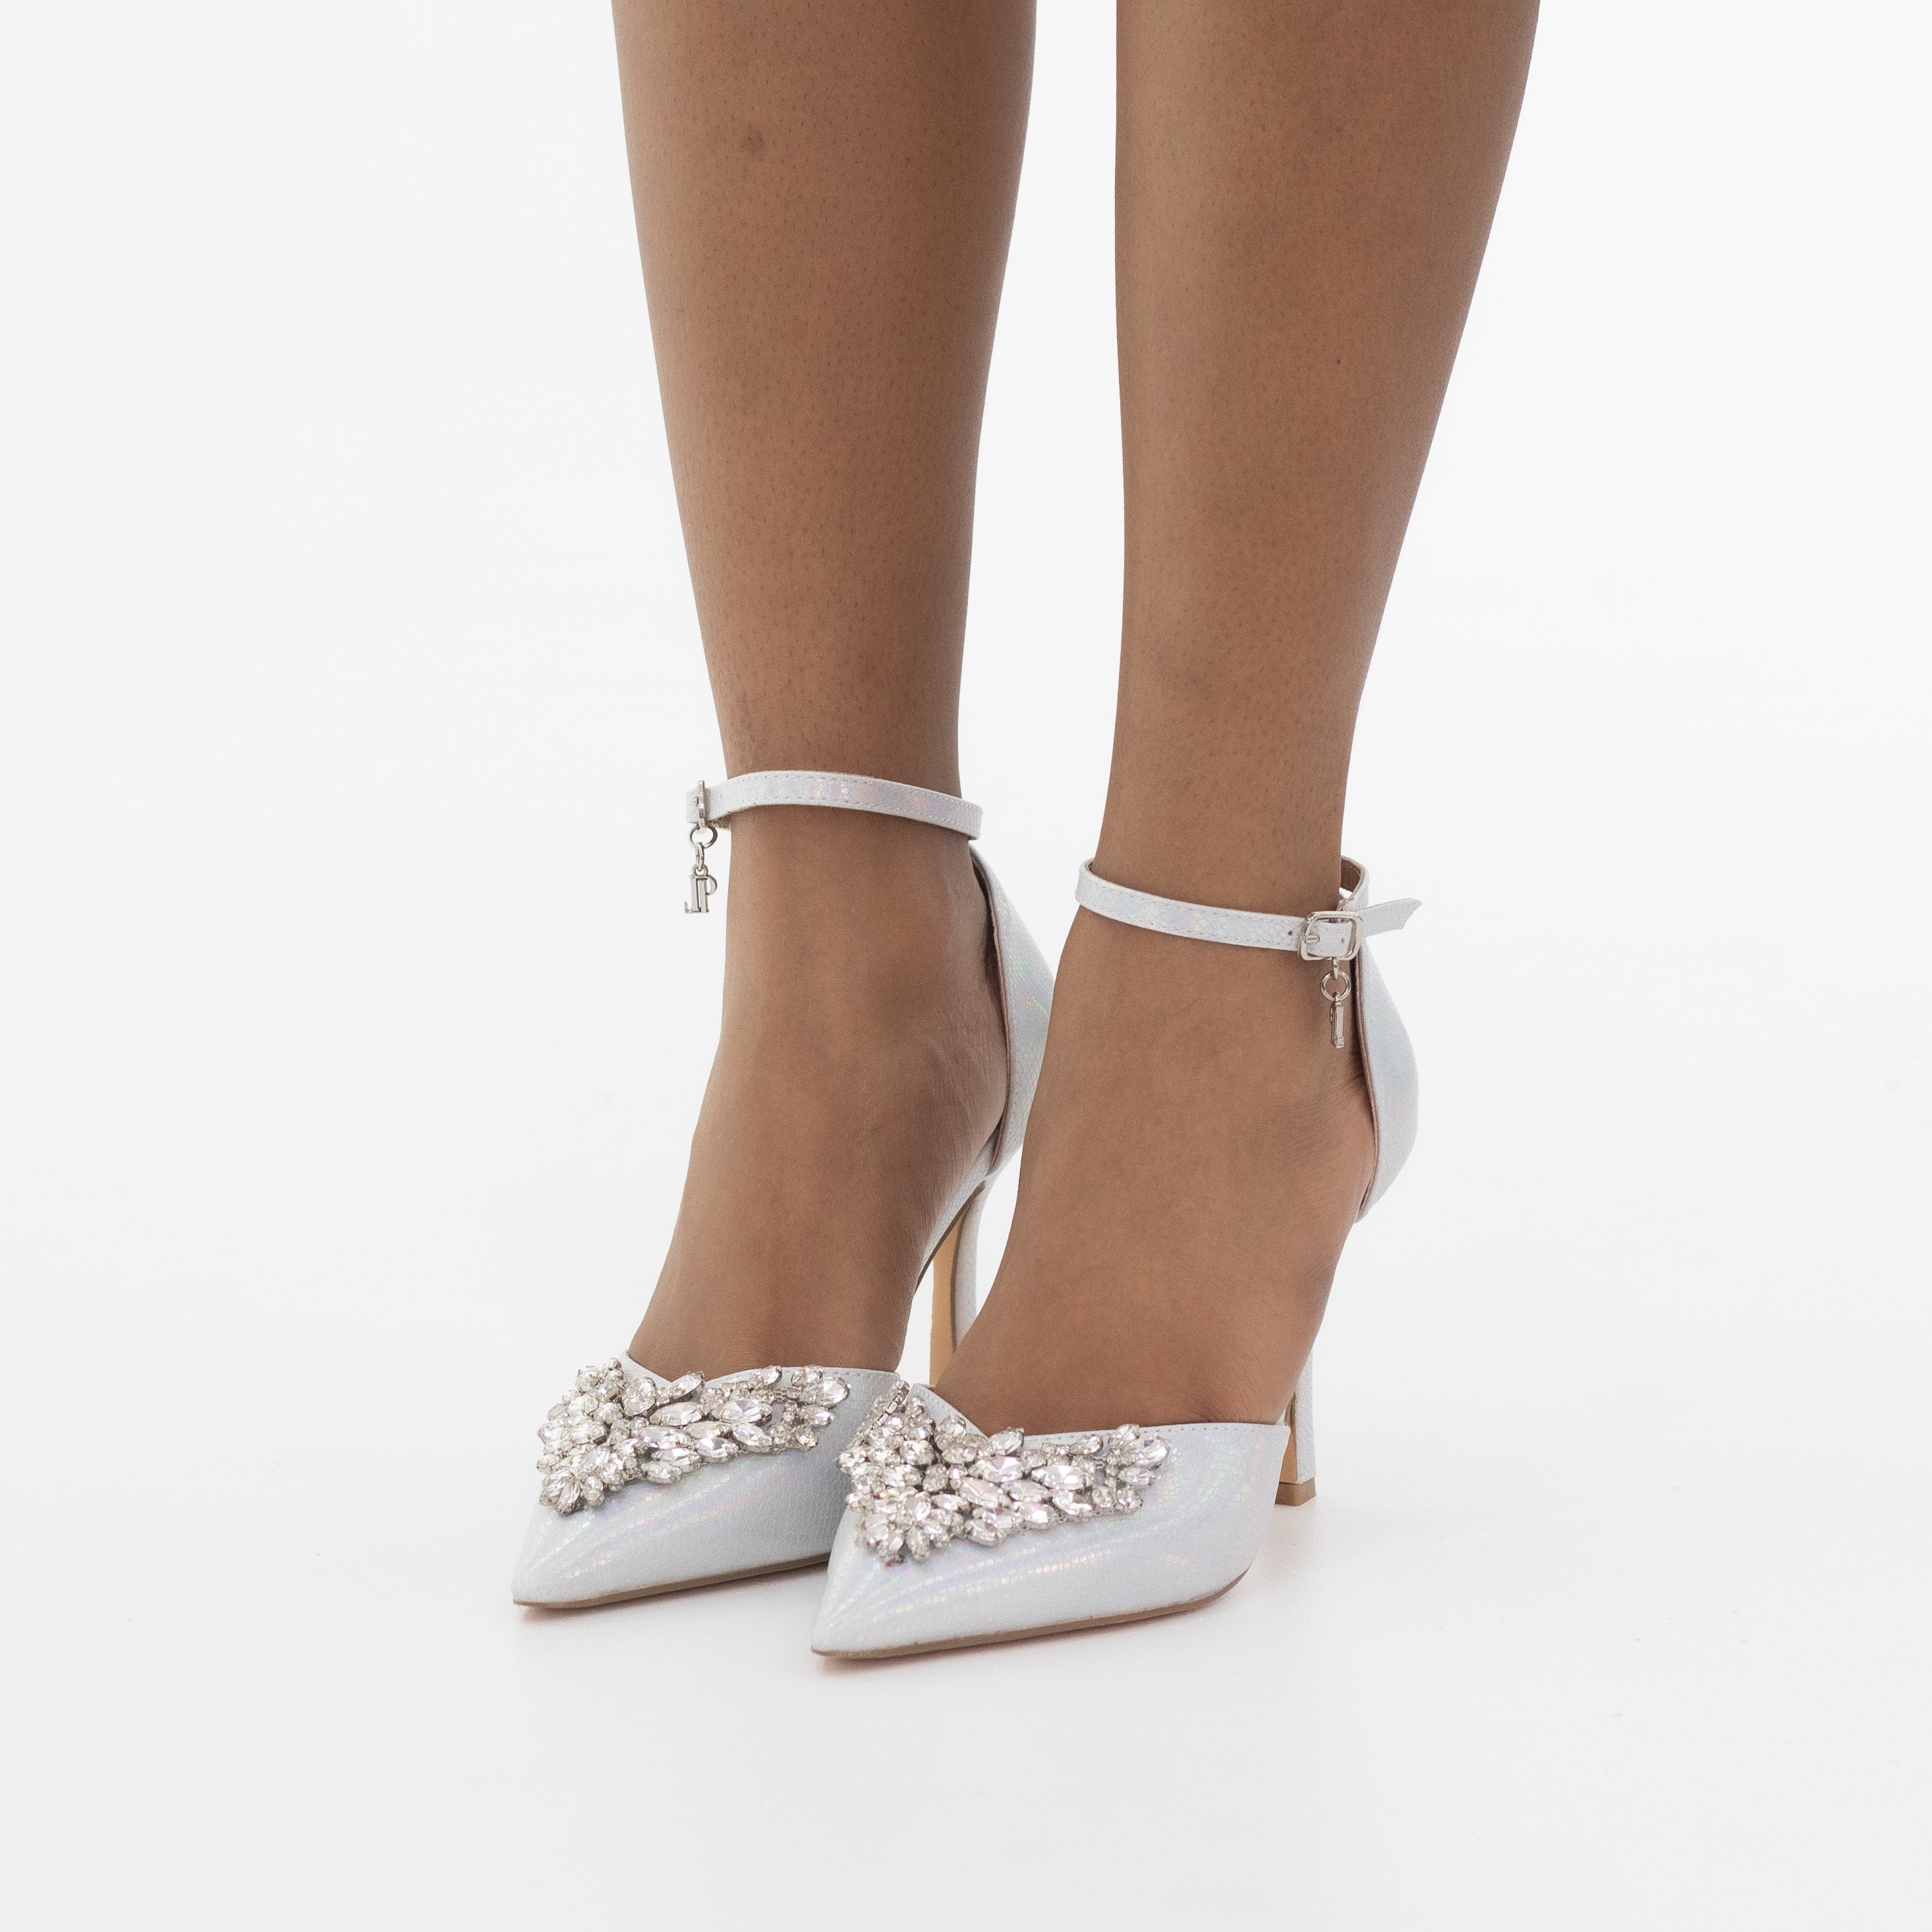 Kora mid heel SATIN PU with v-shaped diamante trim white